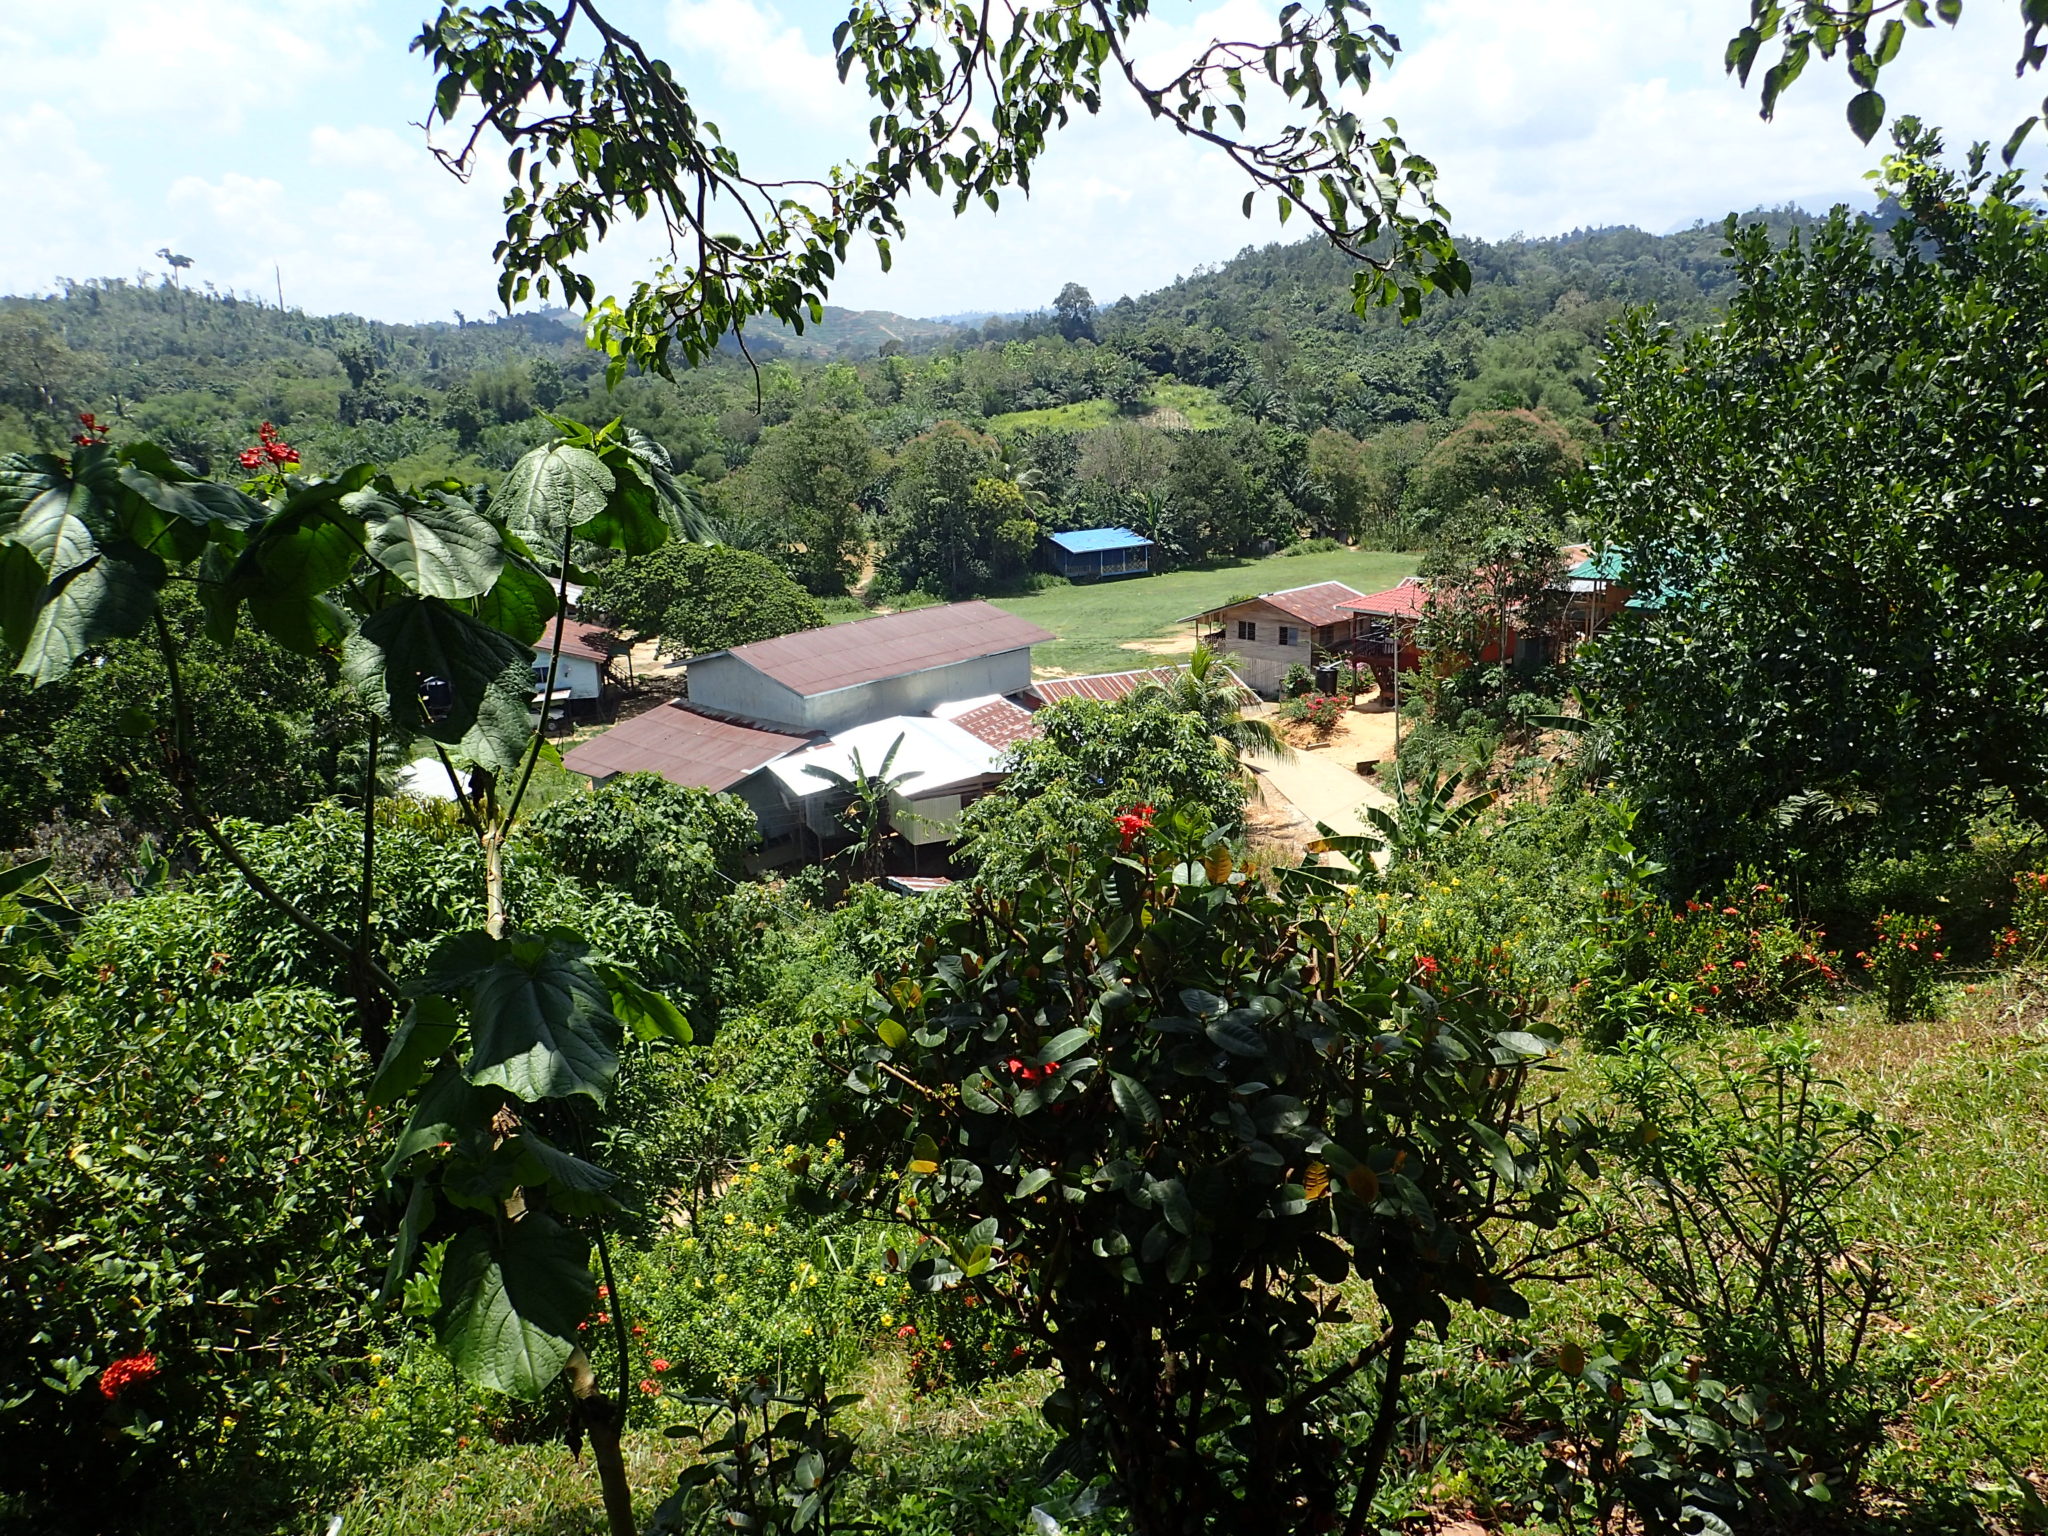 Tampasak Village, in Sabah, Malaysia on the island of Borneo